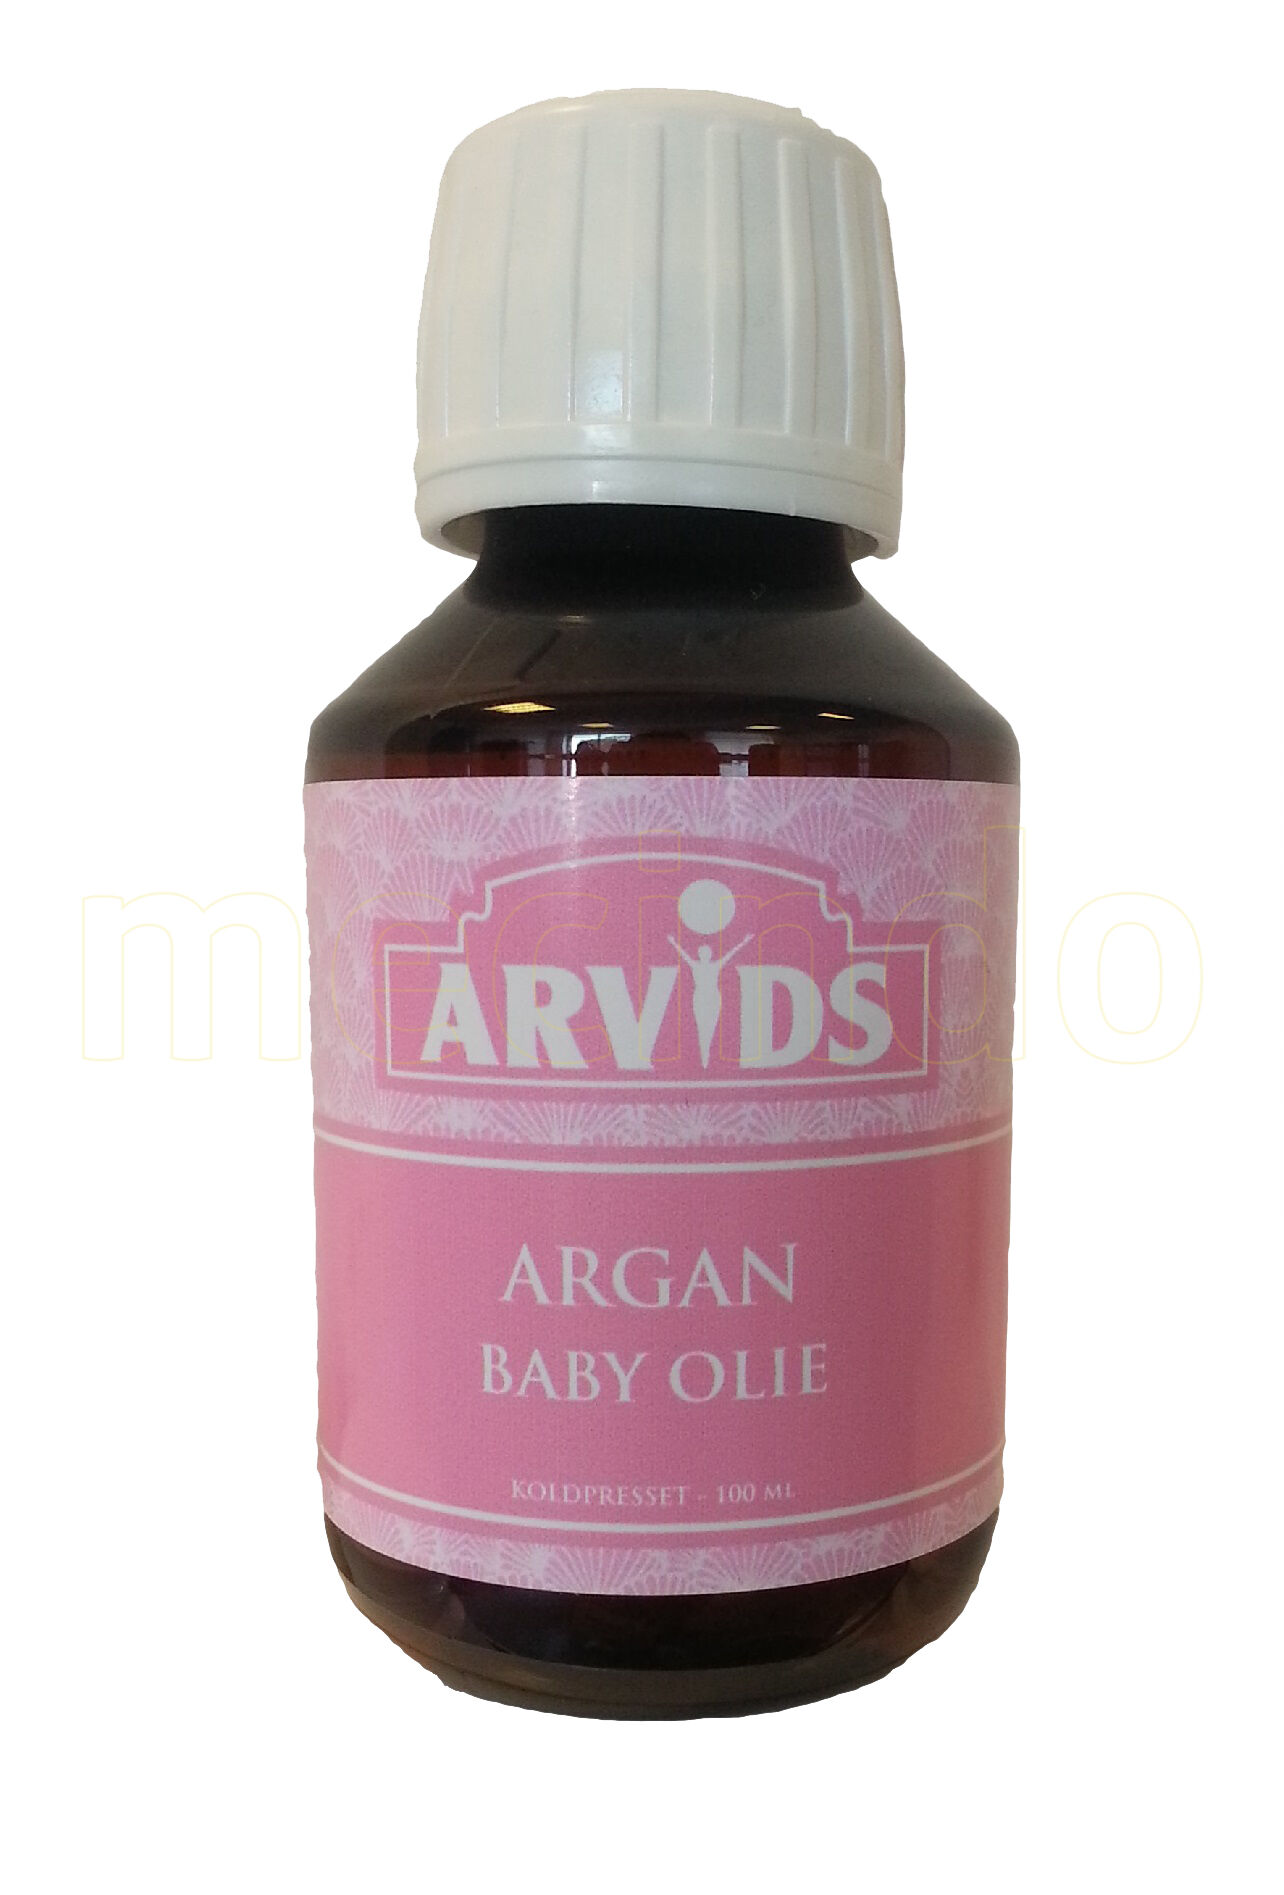 Arvids Argan Baby Olje - 100 ml